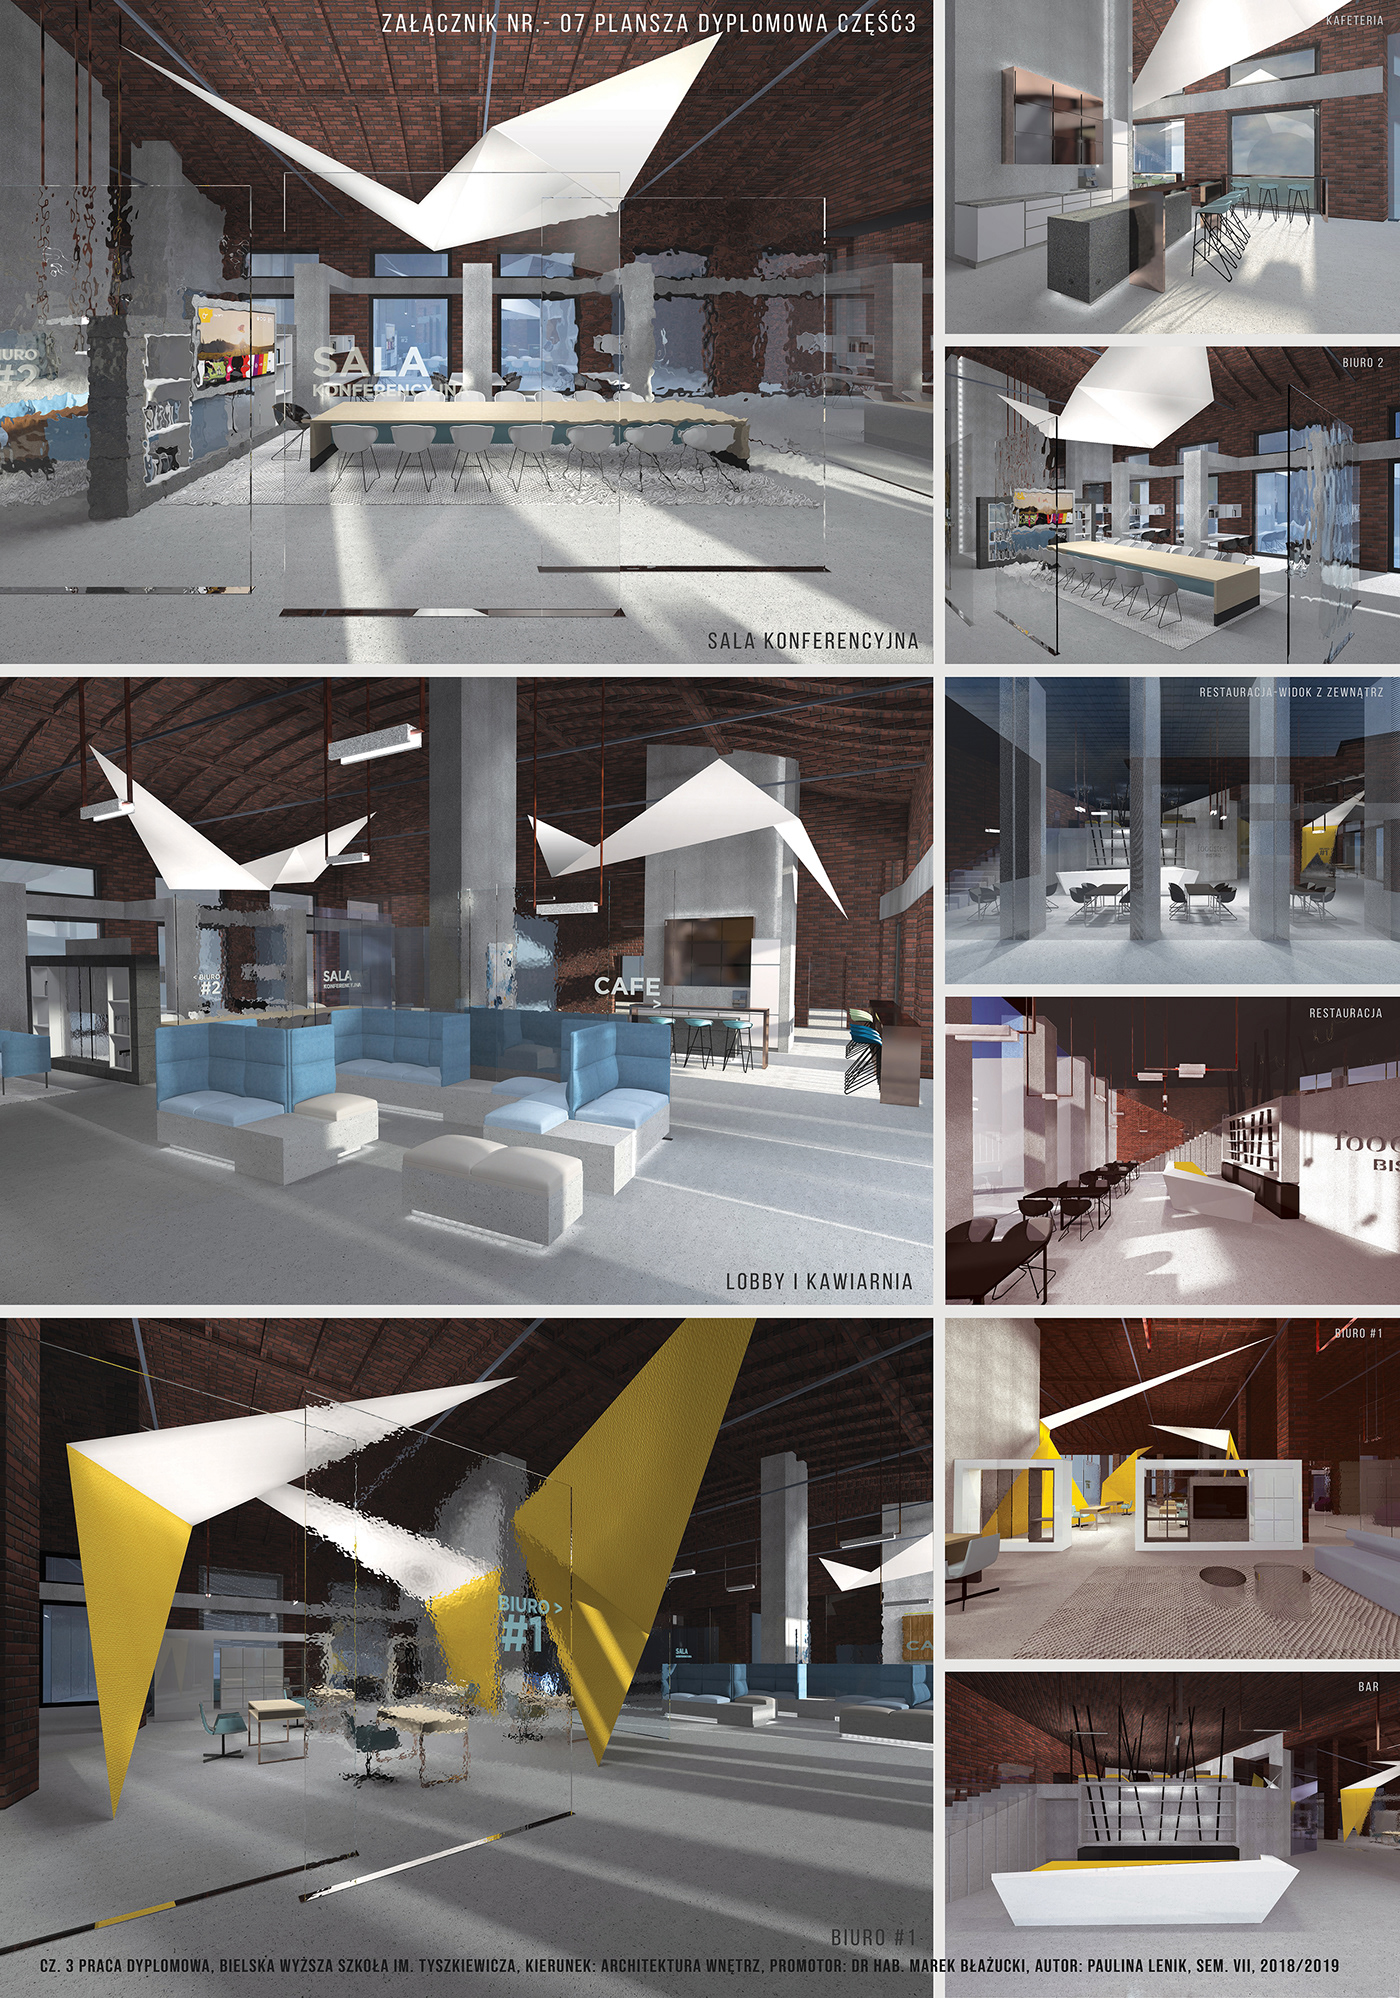 architecture bachelor thesis interior design  post-industrial revitalization Urban Design